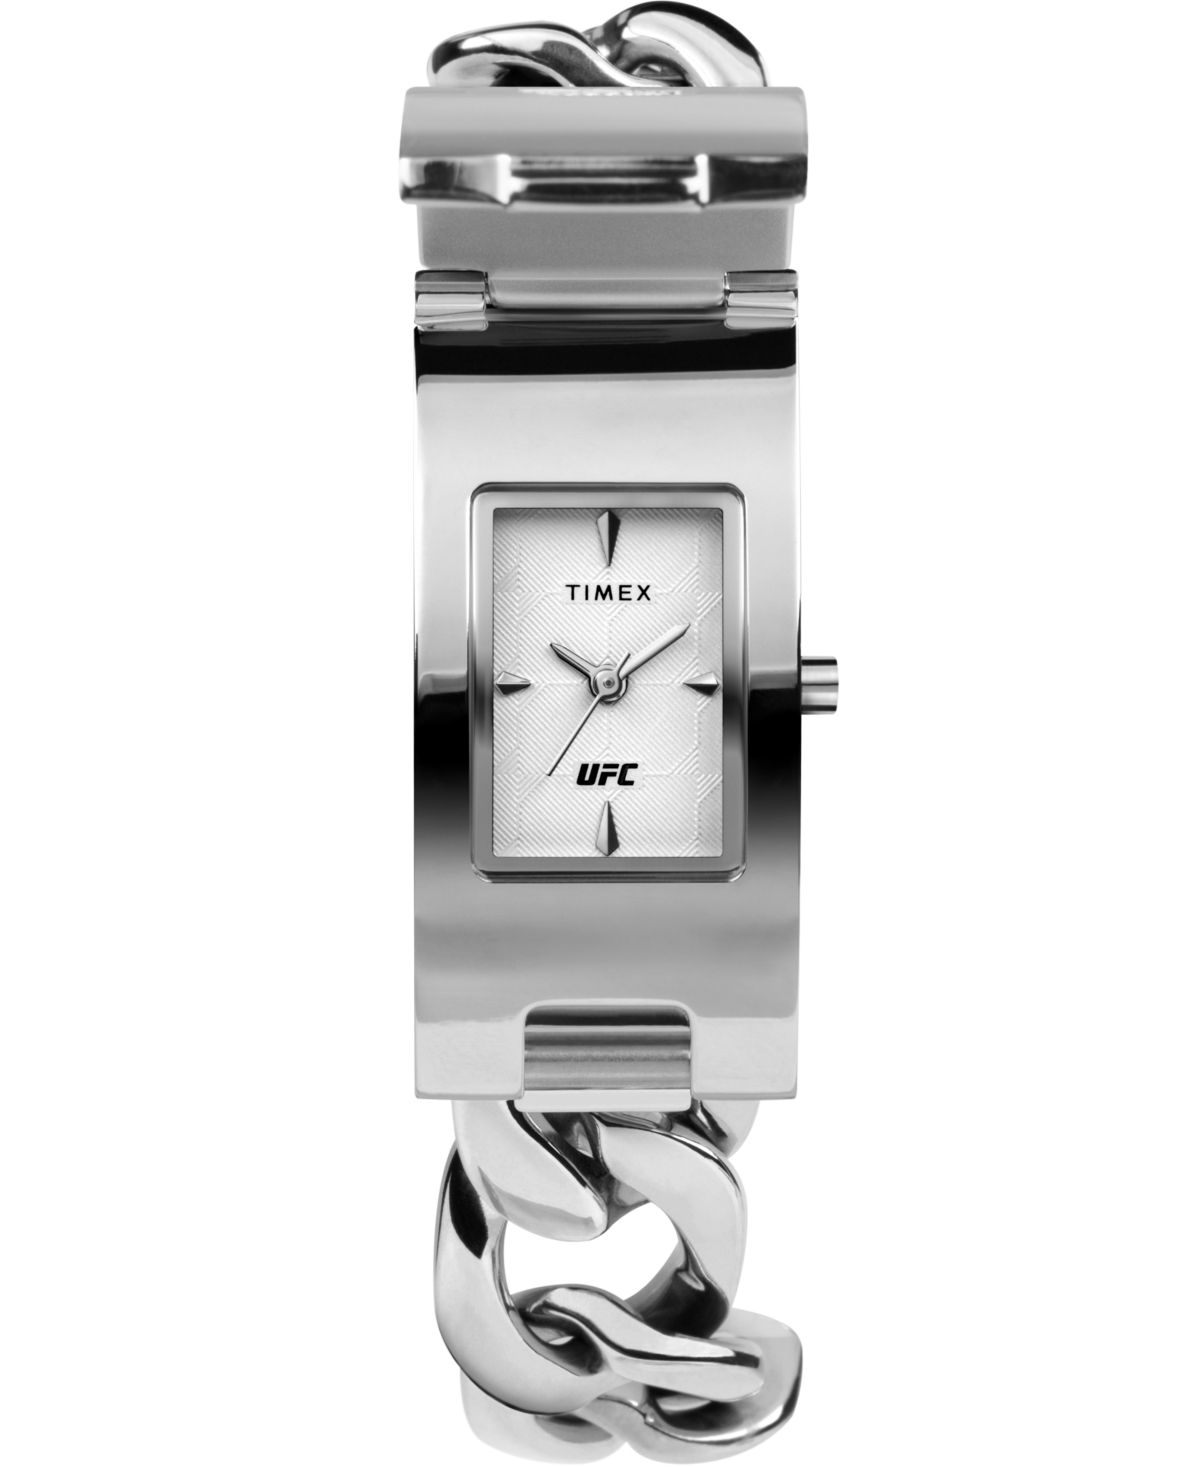 Timex Ufc Men's Quartz Championship Silver-tone Stainless Steel Watch, 20mm